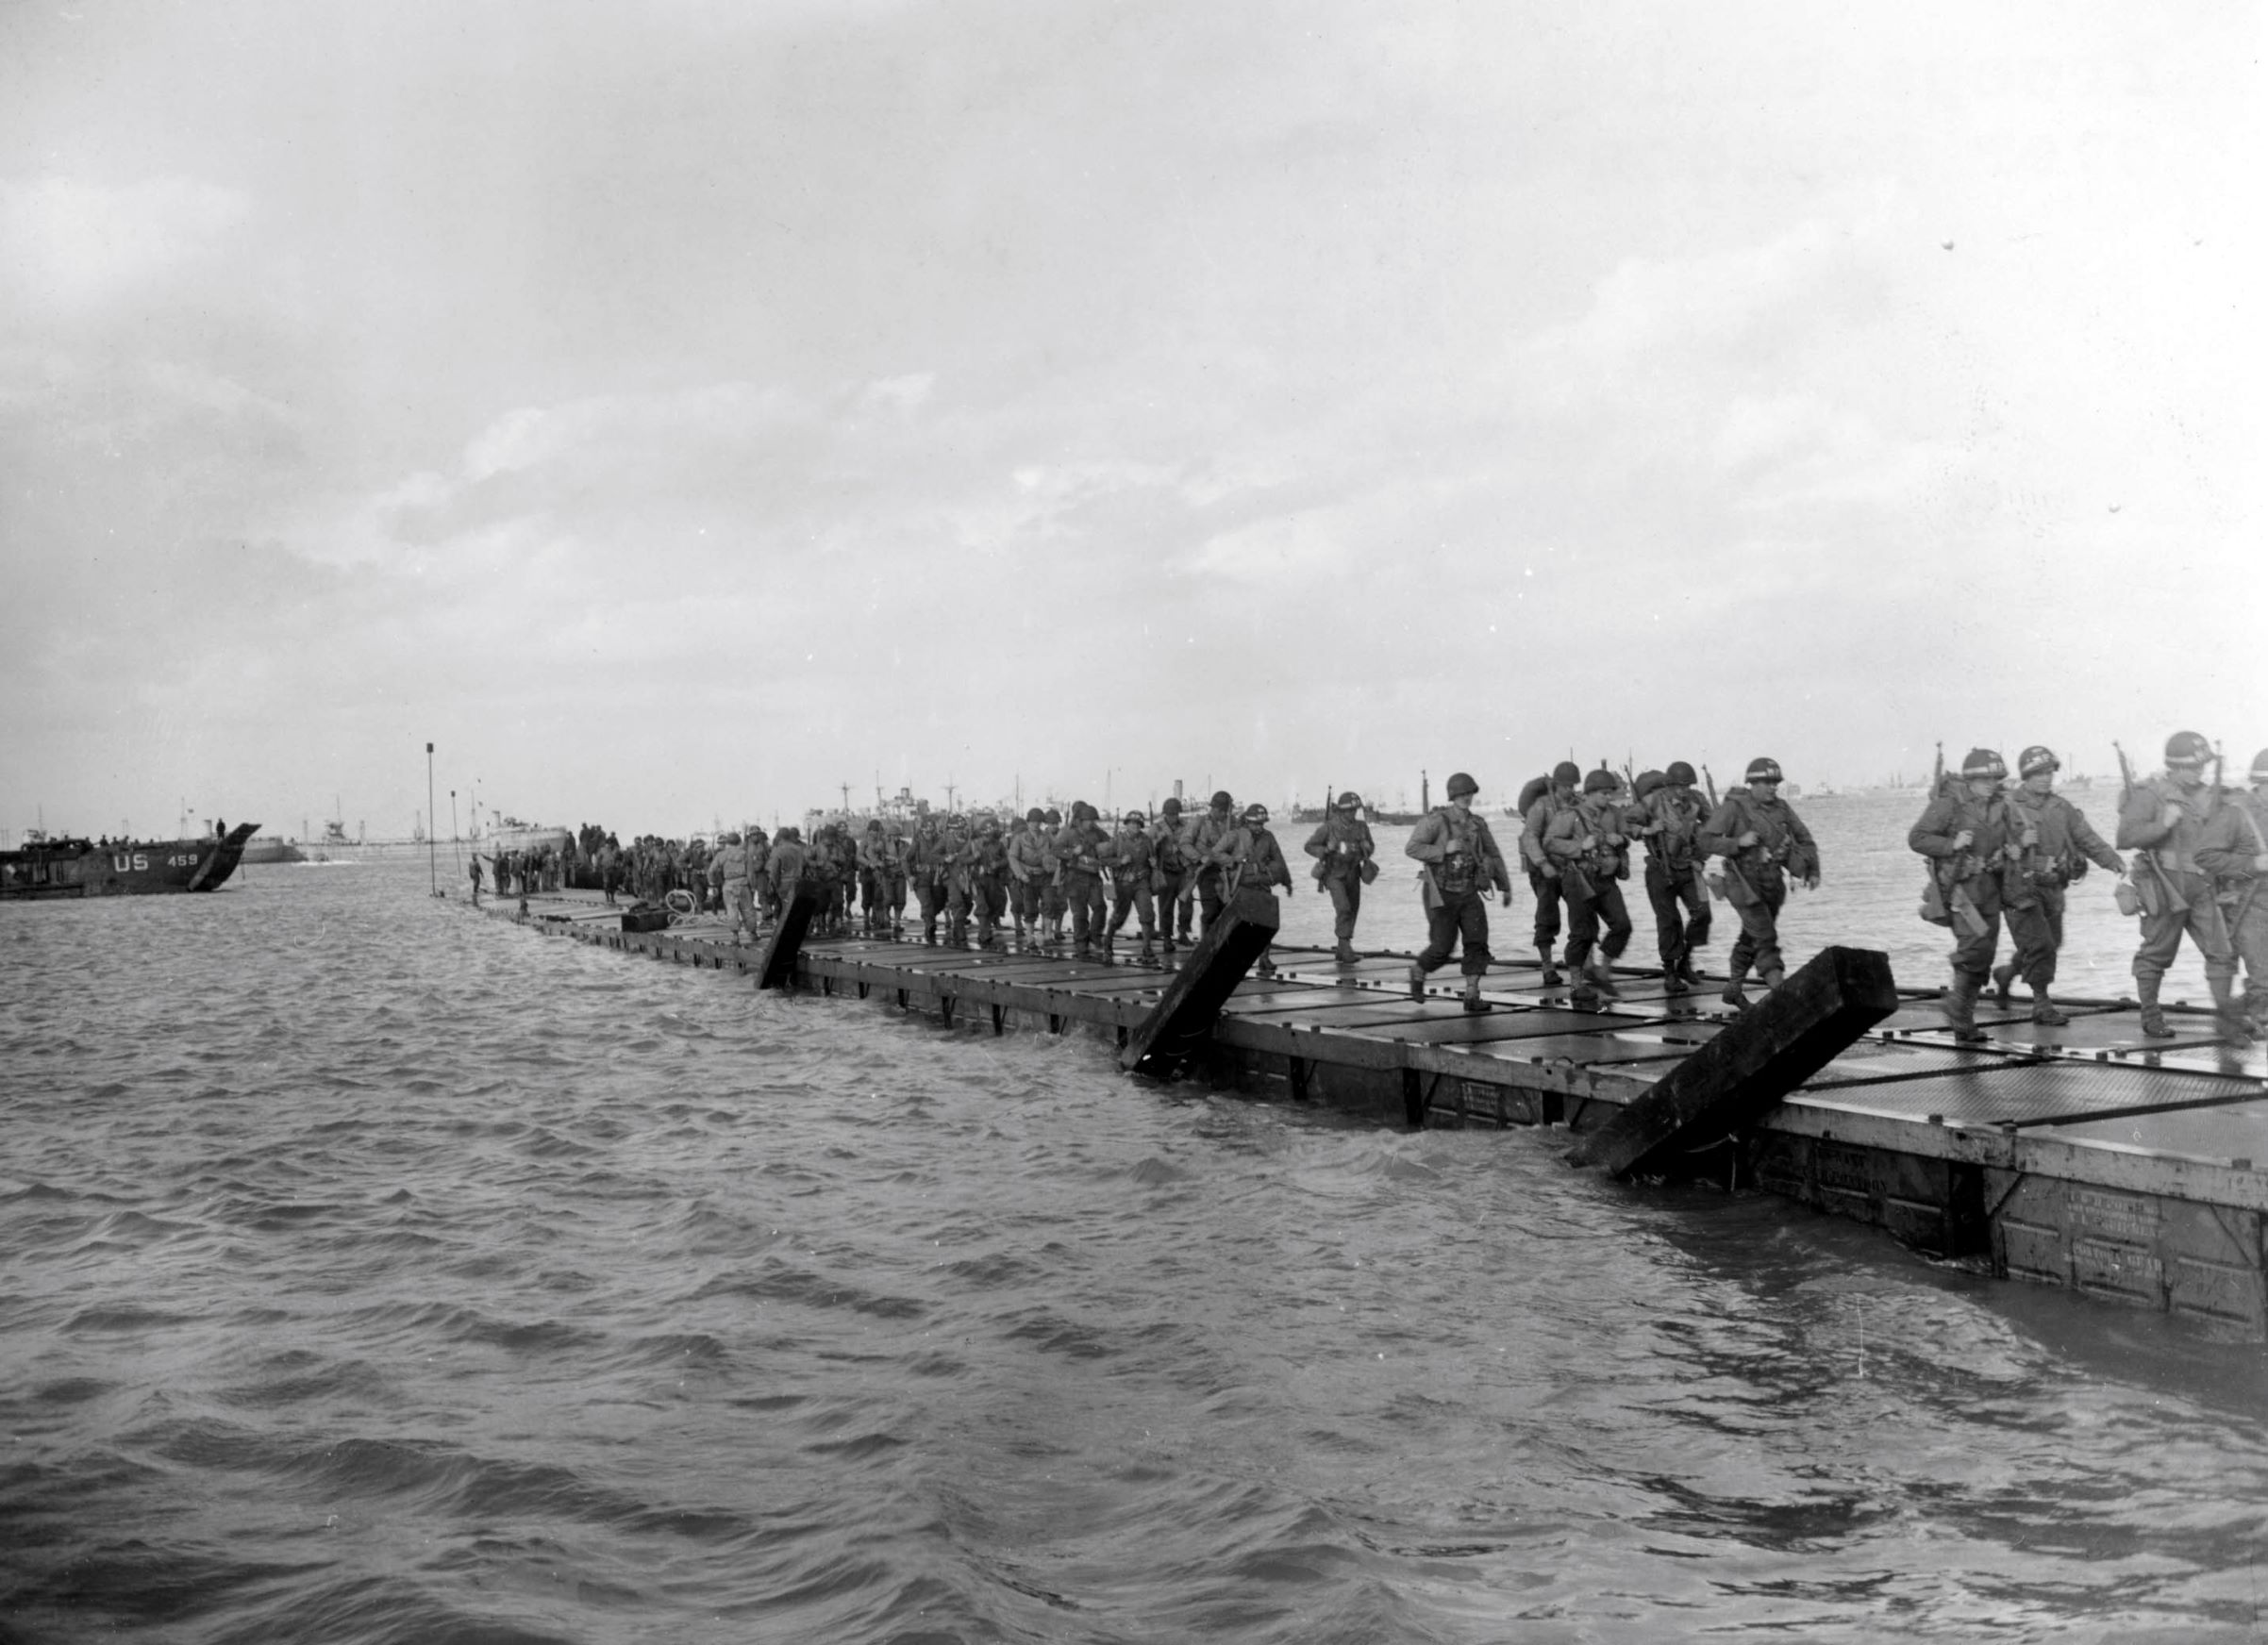 Soldiers marching ashore across pontoon causeways, most likely at Utah Beach.